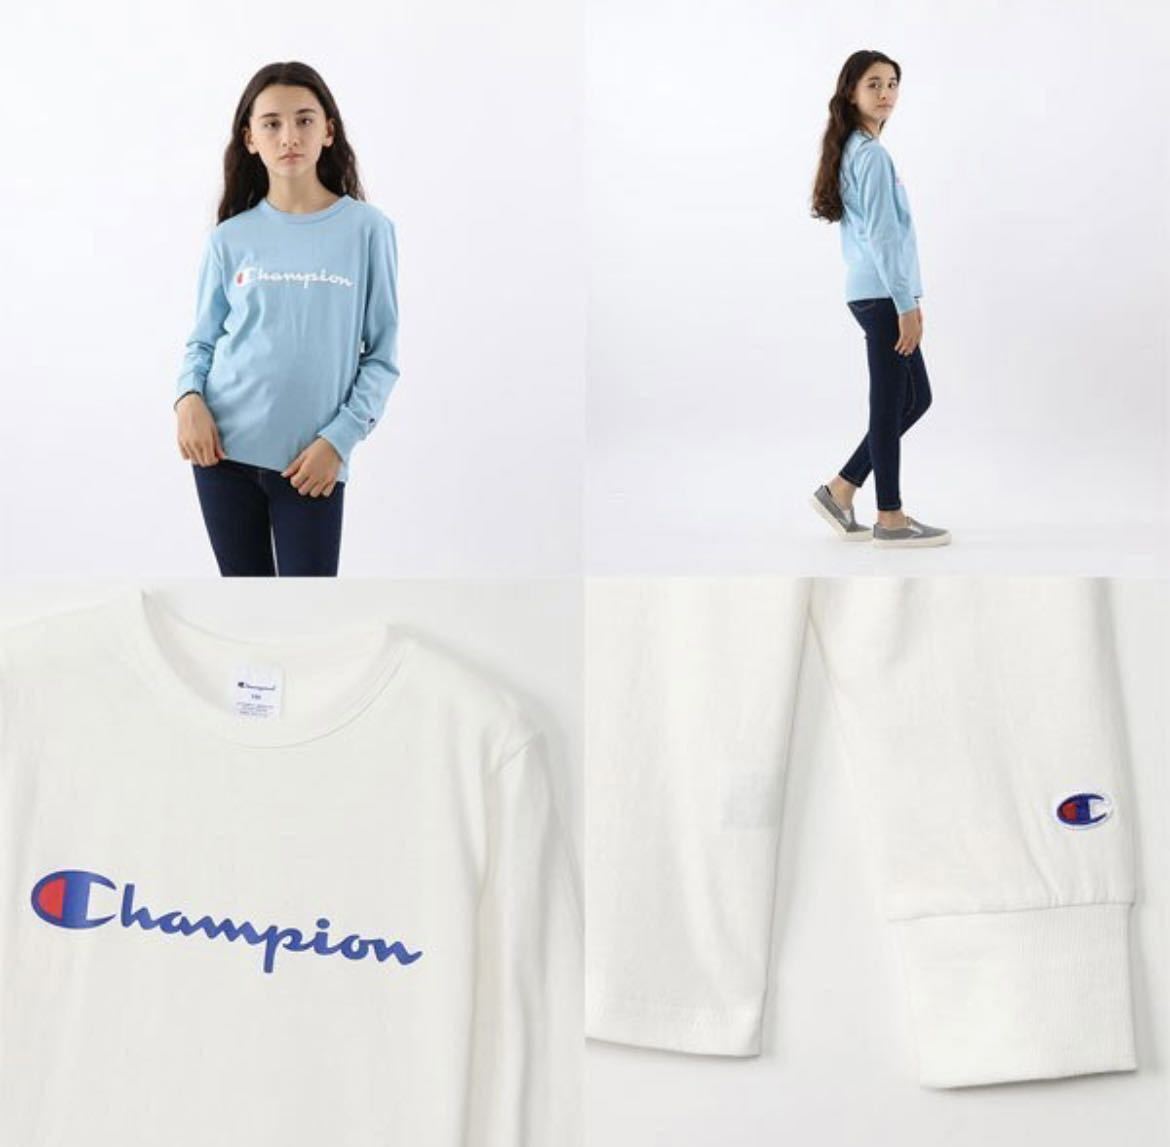  new goods 16757 Champion Champion 150cm white white long sleeve T shirt . print Logo ound-necked T-shirt spring all season Kids Junior man and woman use 